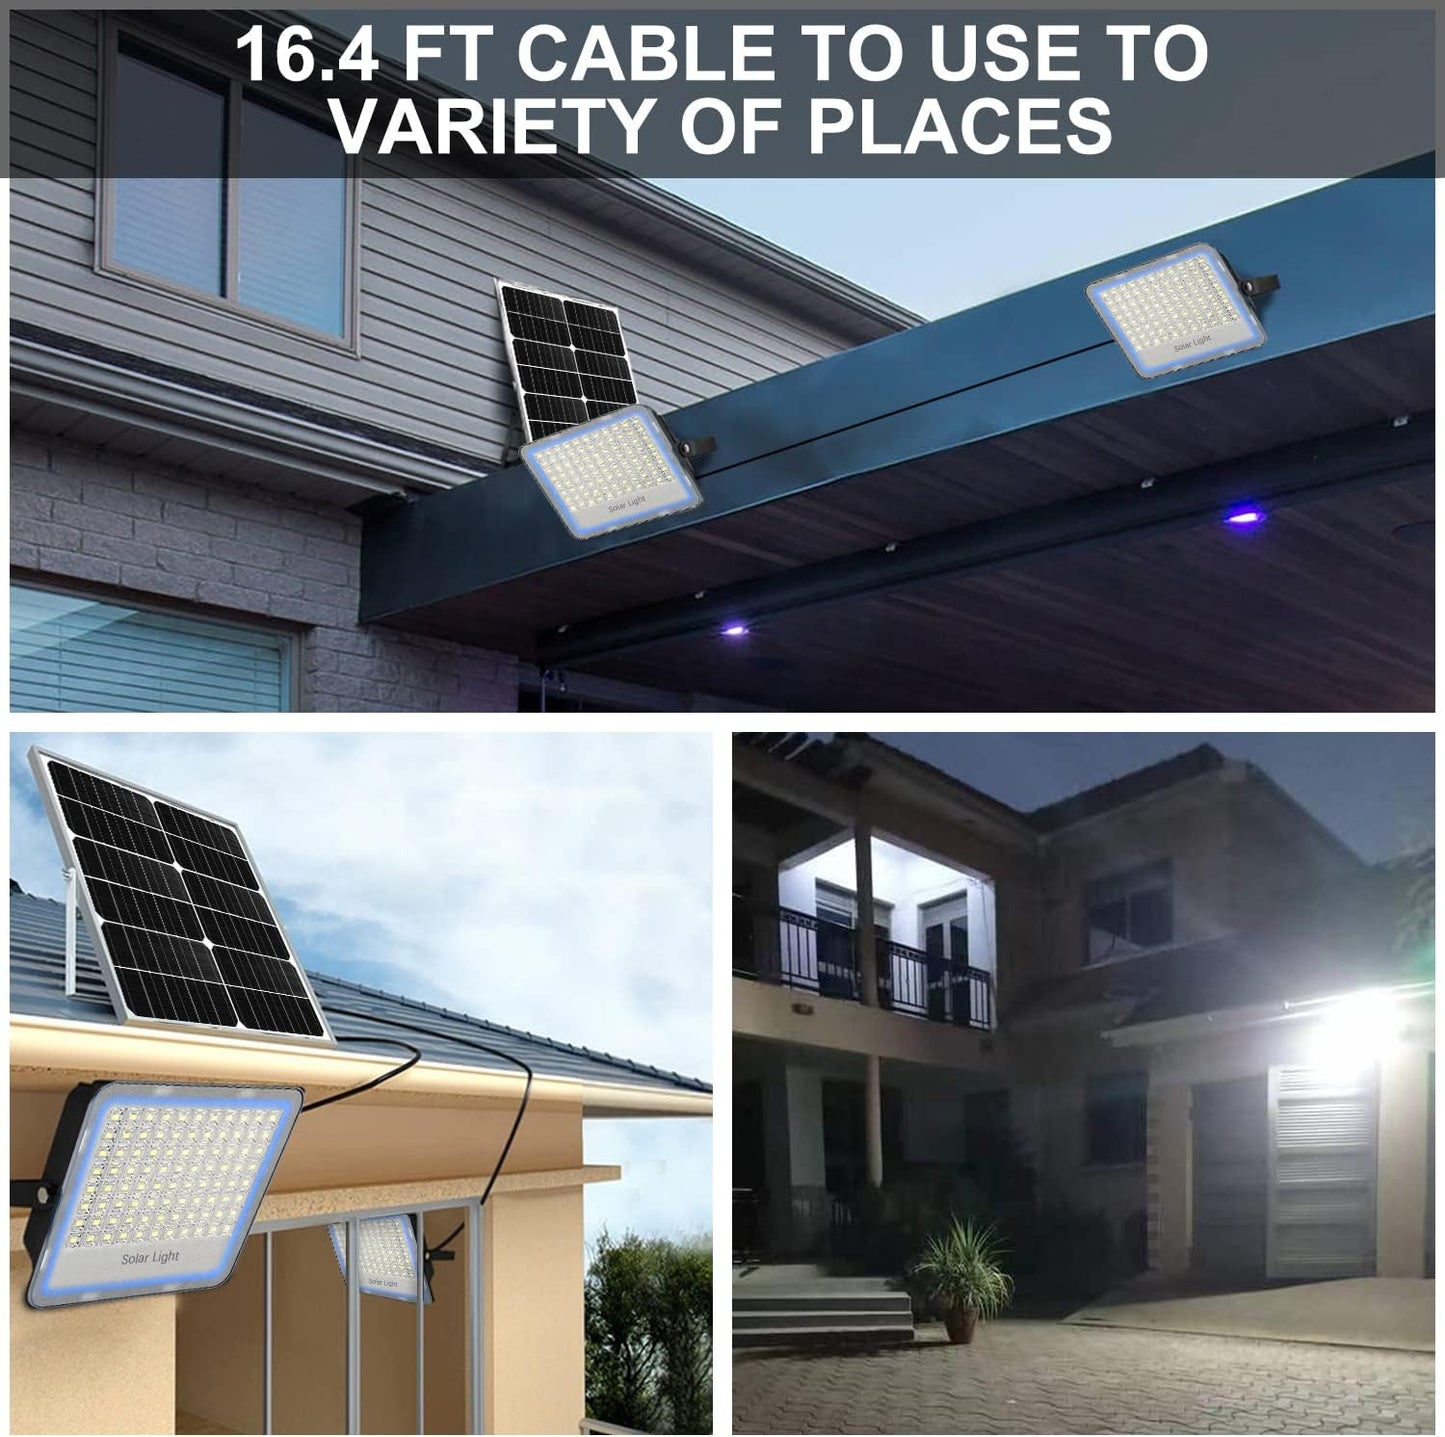 Panou Solar cu Proiector LED, Putere 200W, Rezistent la Apa, Control Prin Telecomada